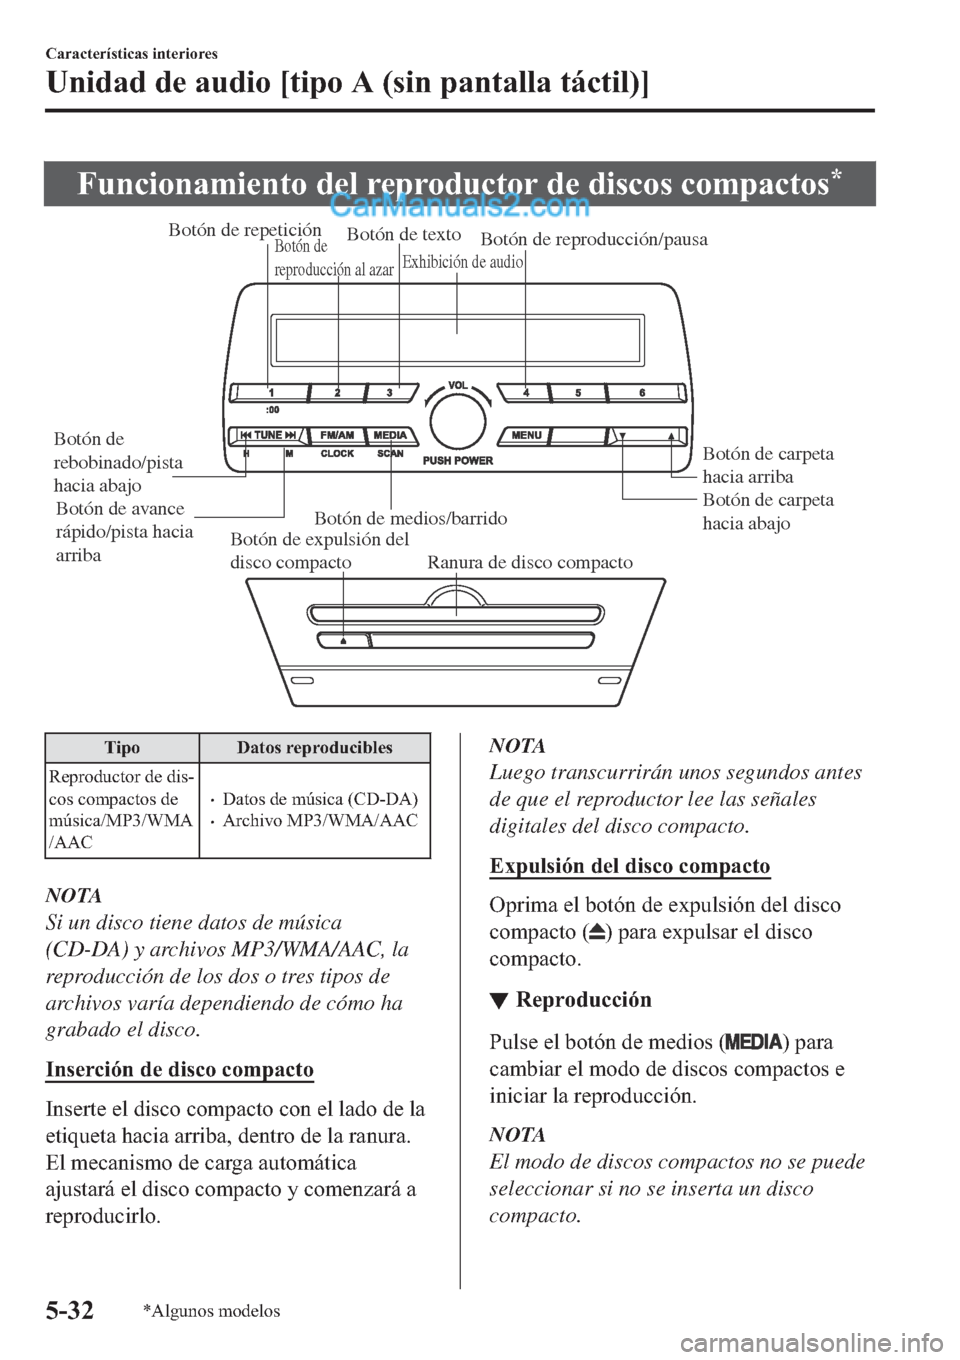 MAZDA MODEL 2 2019  Manual del propietario (in Spanish) �)�X�Q�F�L�R�Q�D�P�L�H�Q�W�R��G�H�O��U�H�S�U�R�G�X�F�W�R�U��G�H��G�L�V�F�R�V��F�R�P�S�D�F�W�R�V�
Botón de expulsión del 
disco compactoRanura de disco compacto Botón de medios/barridoBotón d